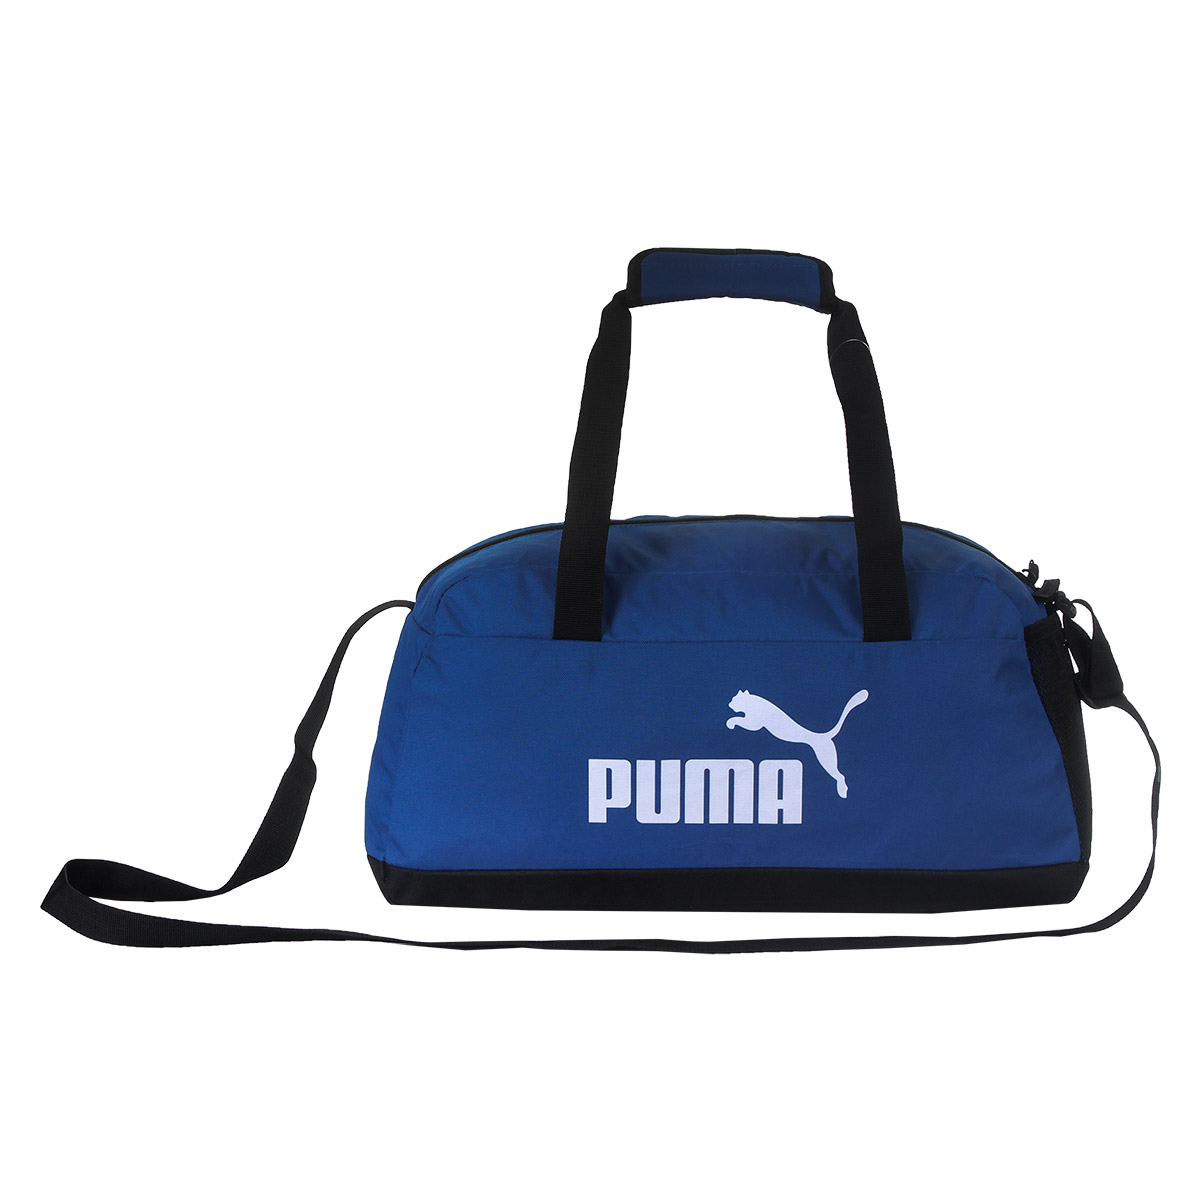 Mala Puma Phase Sport Unissex - Azul/Preto